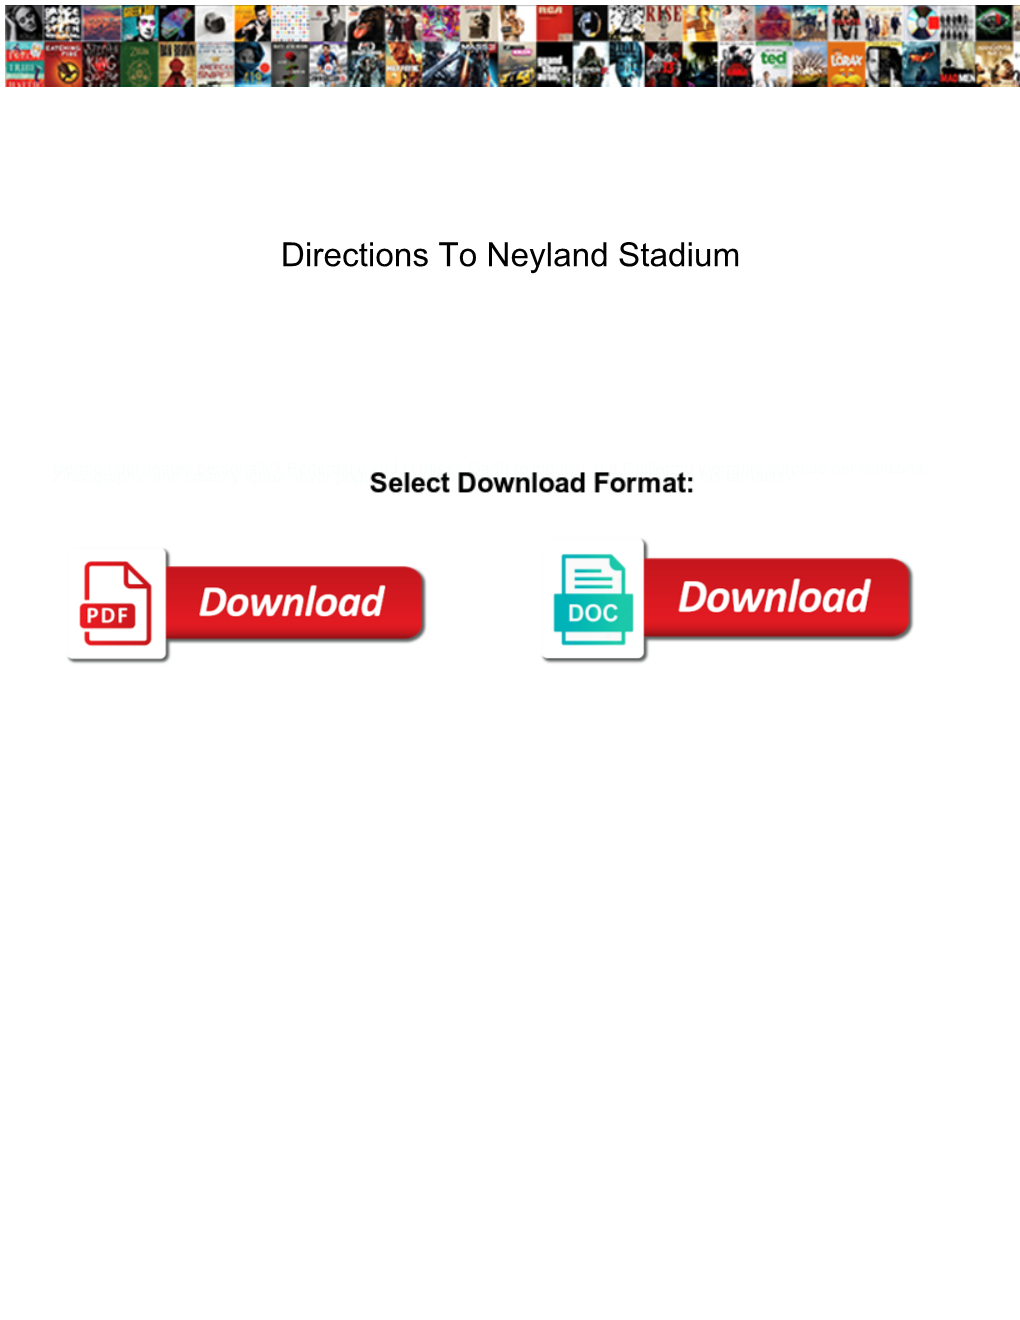 Directions to Neyland Stadium